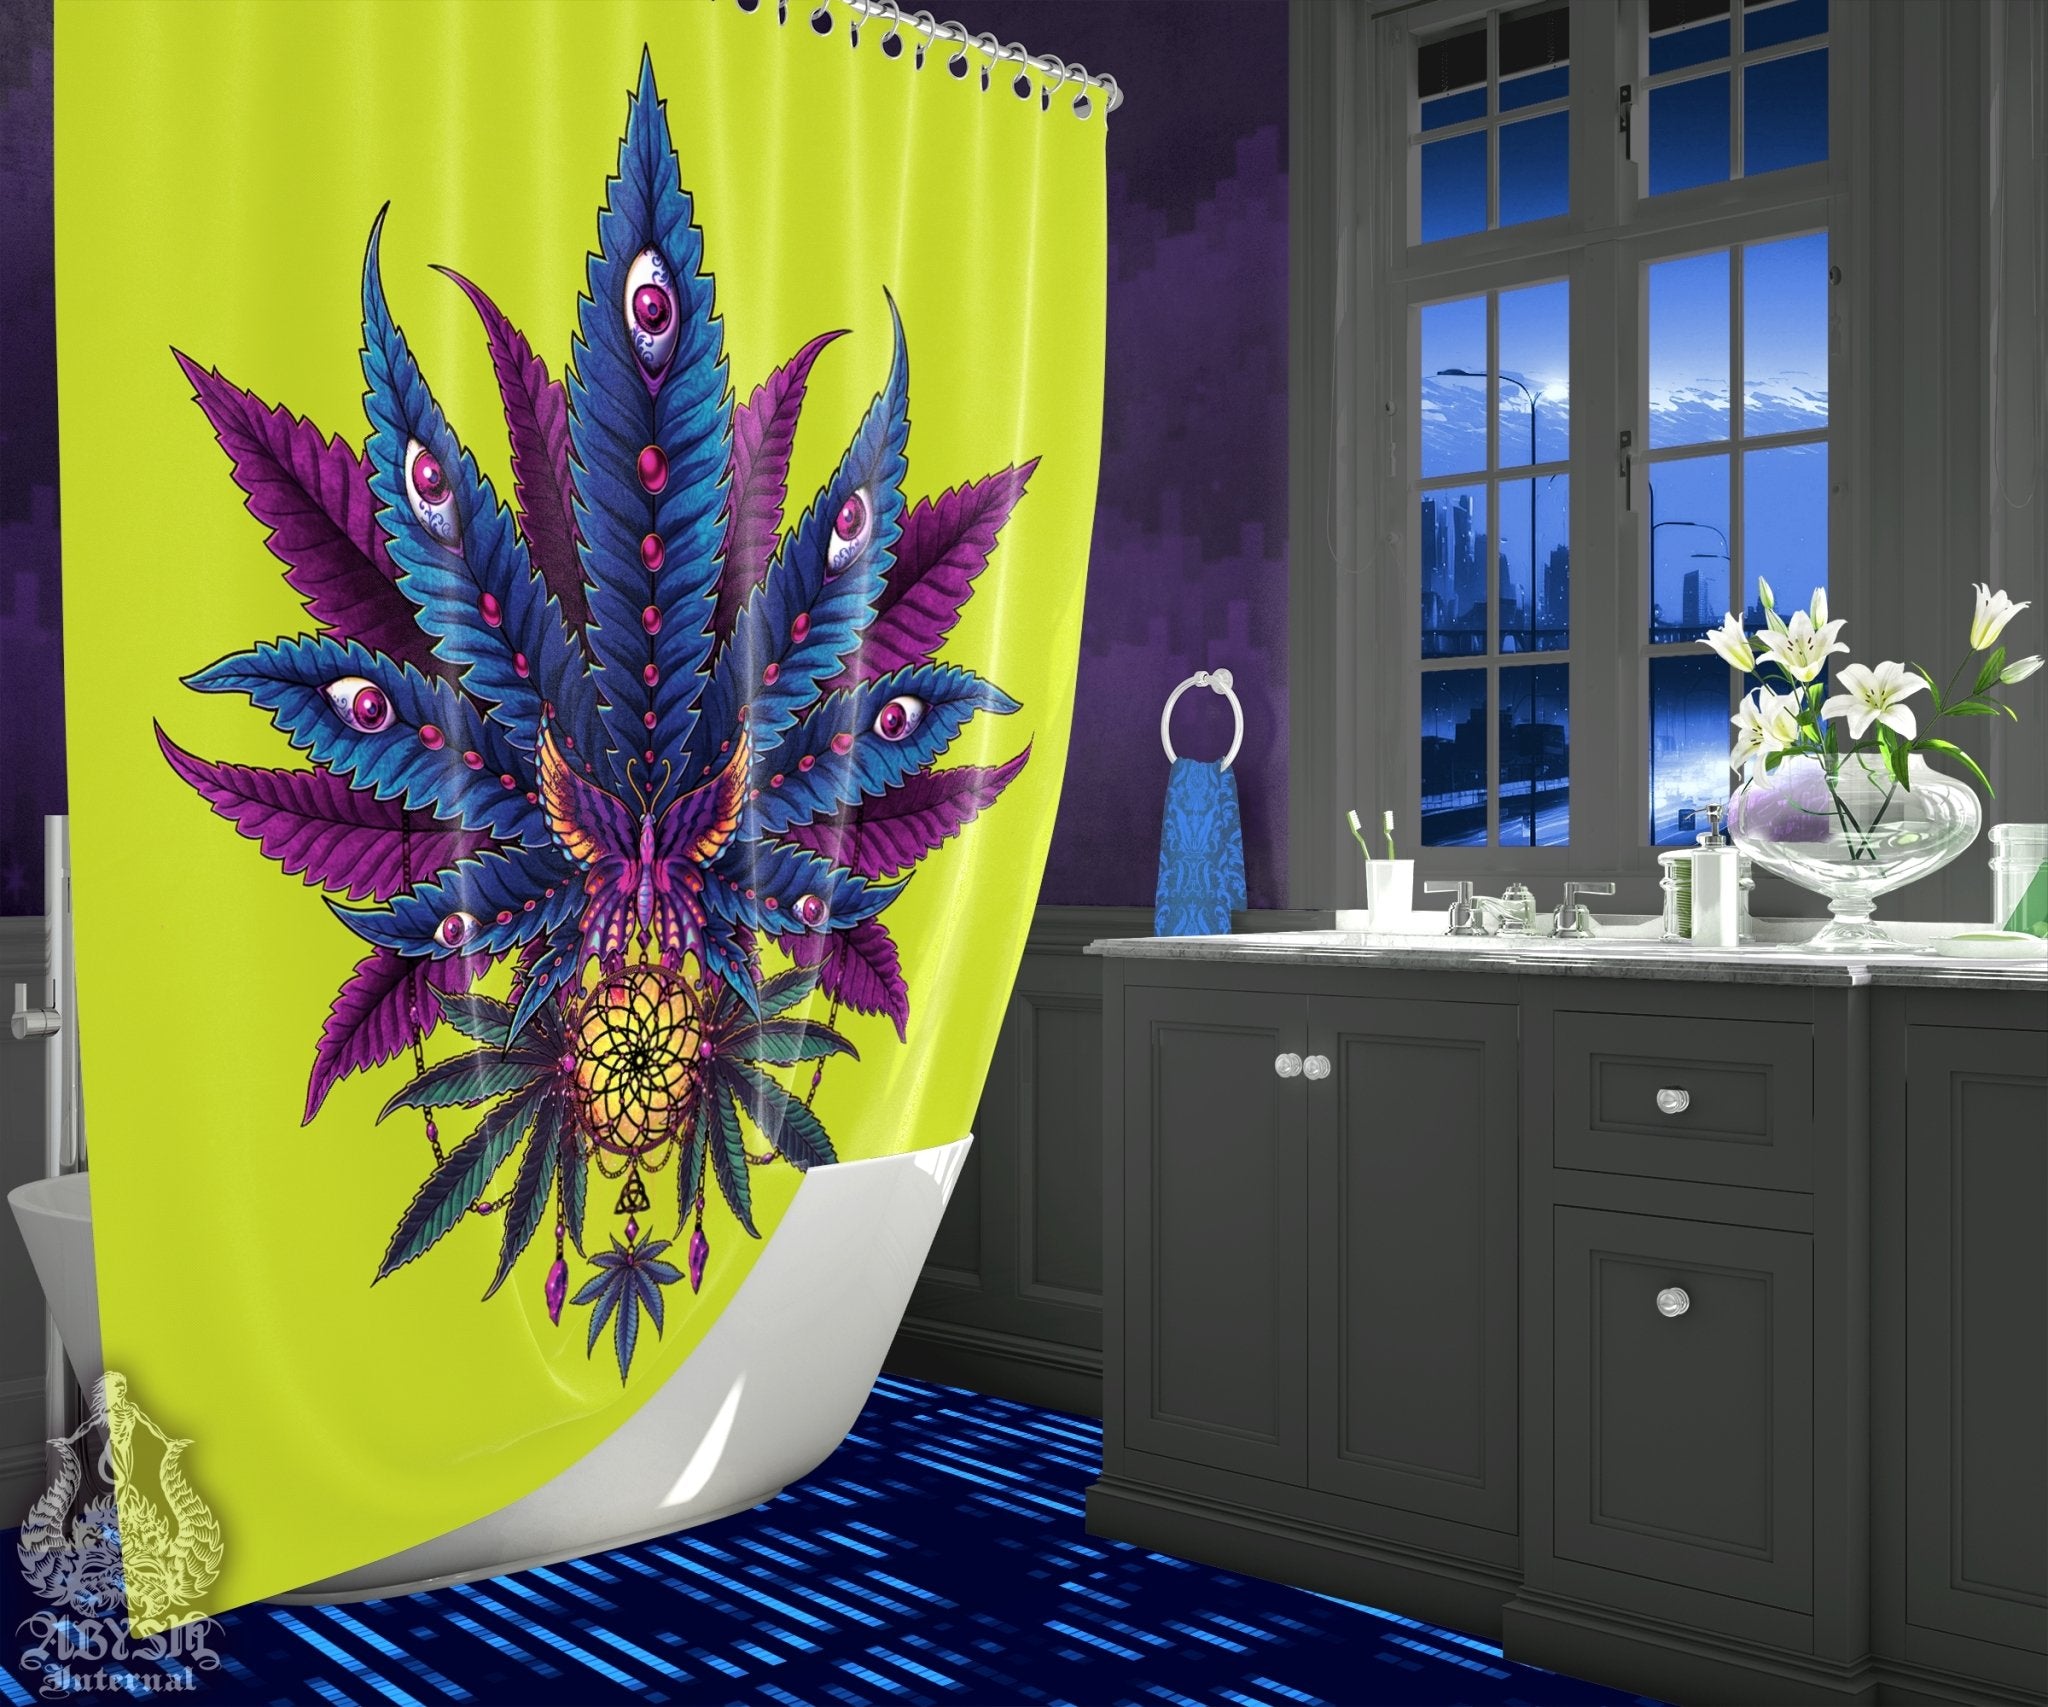 Weed Shower Curtain, Indie Bathroom Decor, Psychedelic Cannabis, 80s Retrowave, Hippie 420 Home Art - Marijuana Neon II - Abysm Internal